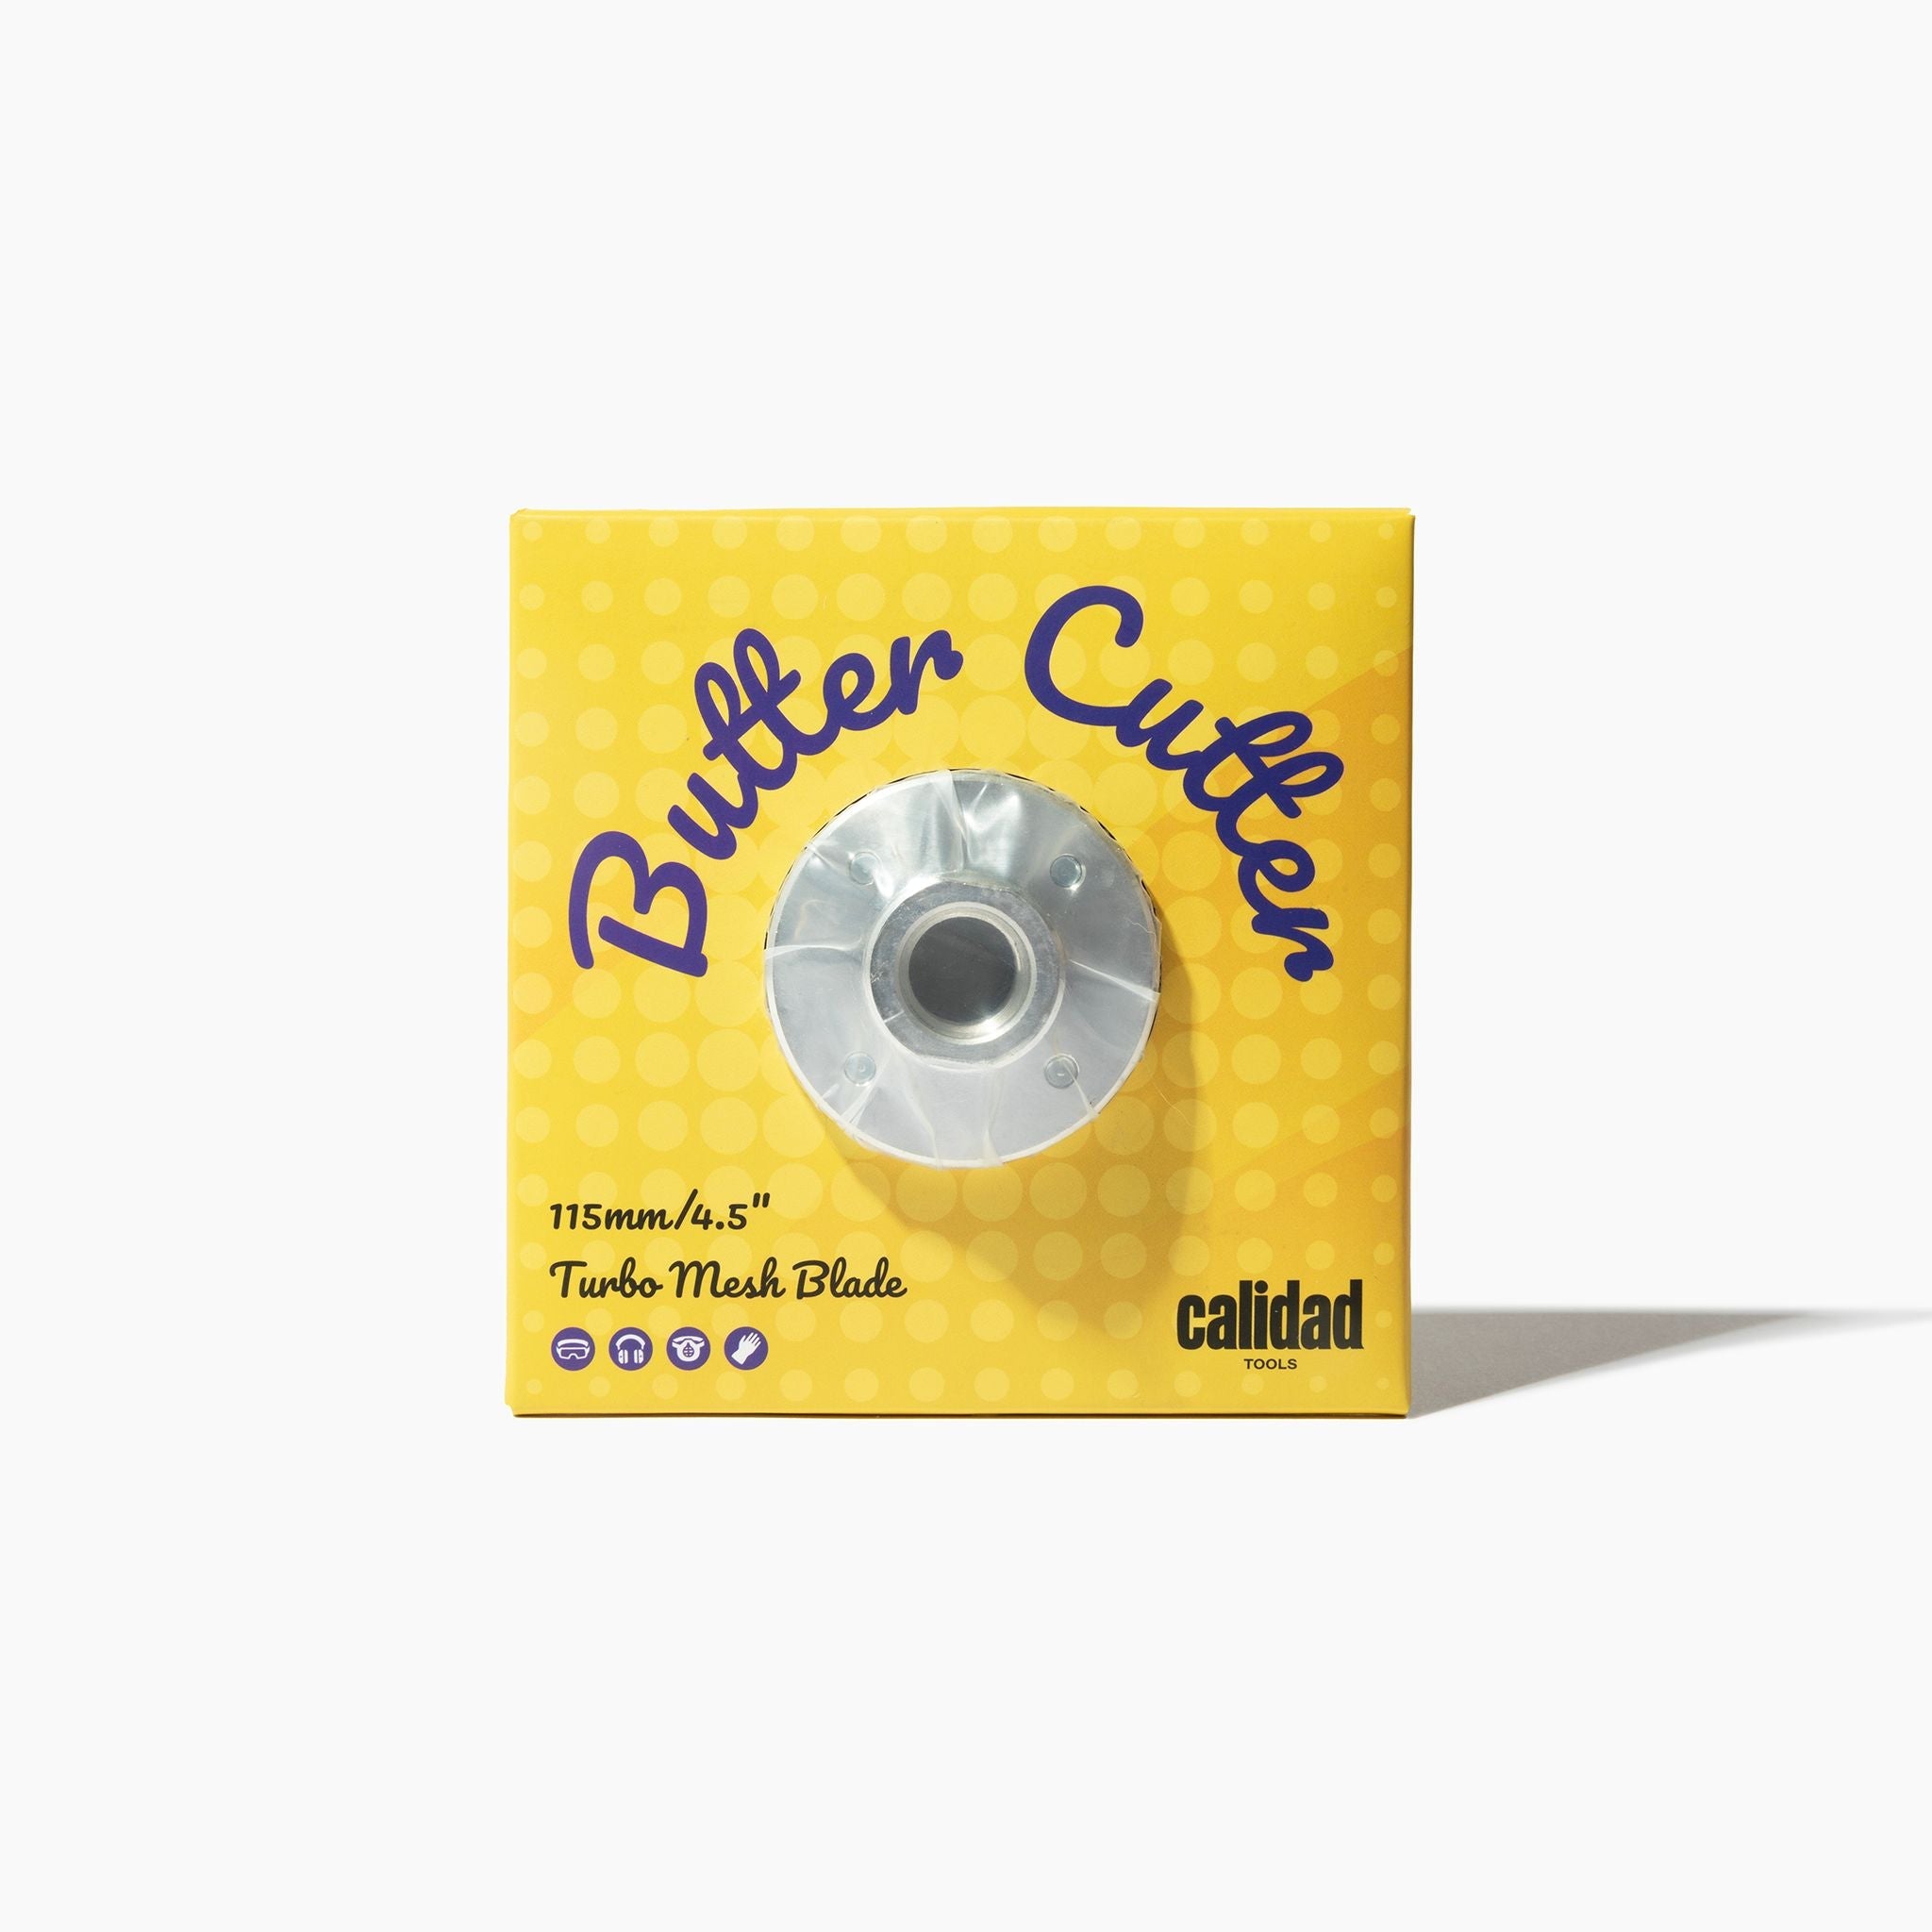 Calidad 4.5" Turbo Mesh Flush Mount "Butter Cutter" Grinder Blade (with Flange)